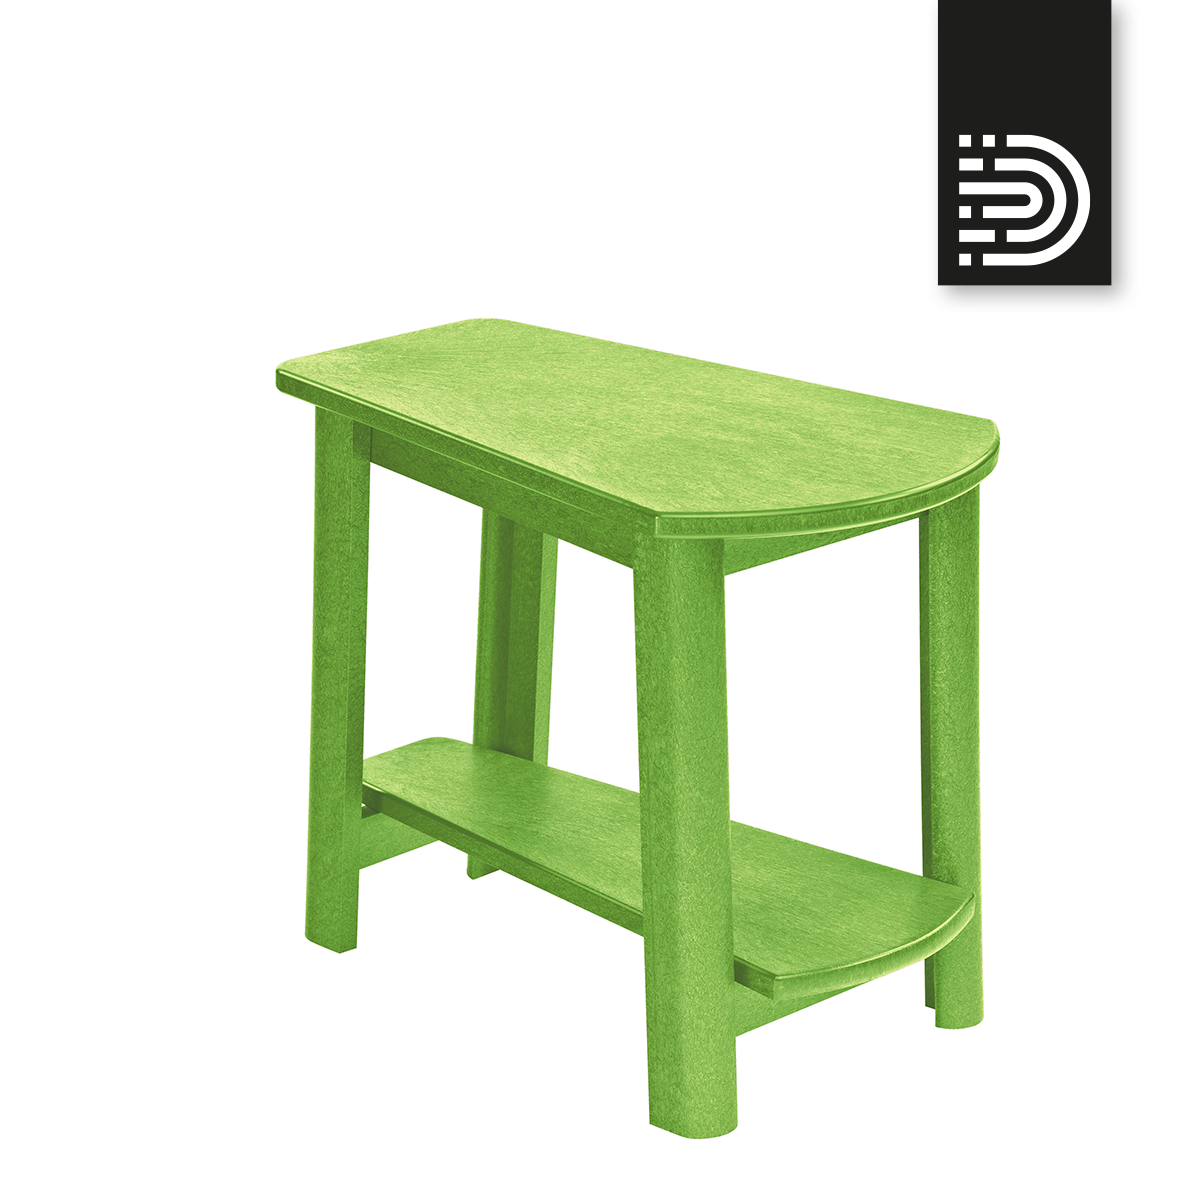 T04 Addy Side Table - kiwi green 17